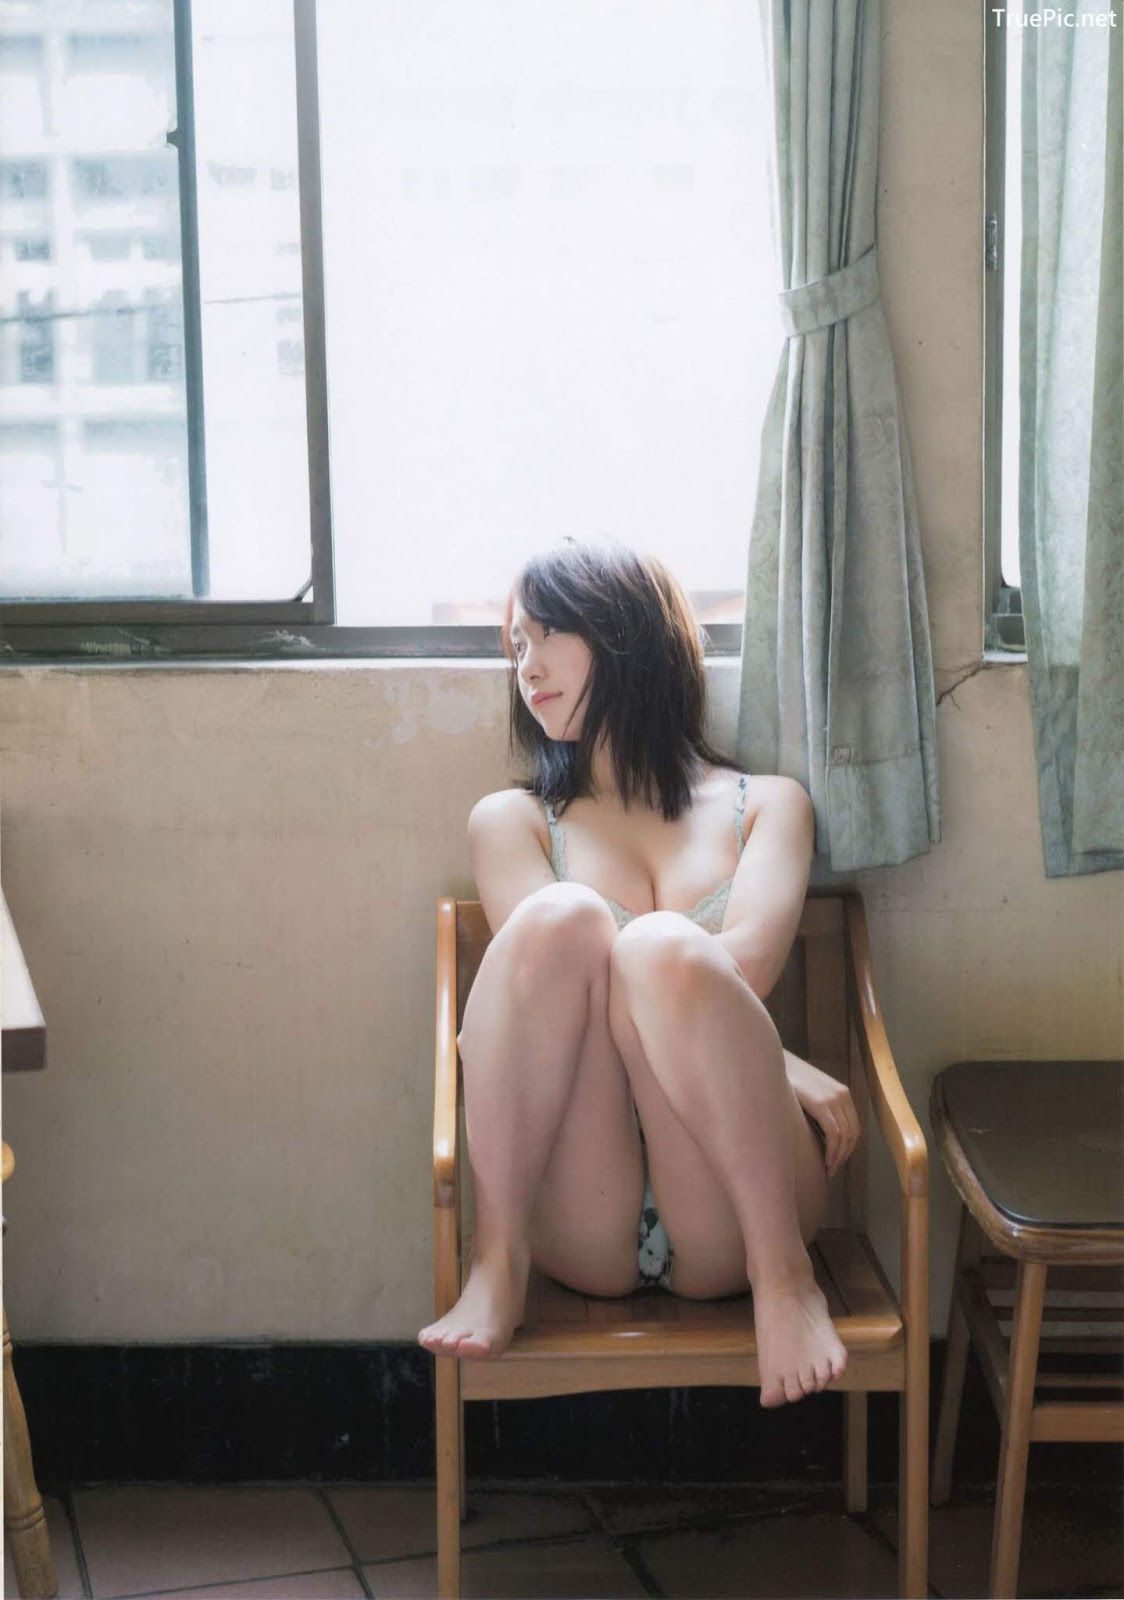 Image Japanese Beauty - Juri Takahashi - Ambiguous Self - TruePic.net - Picture-60